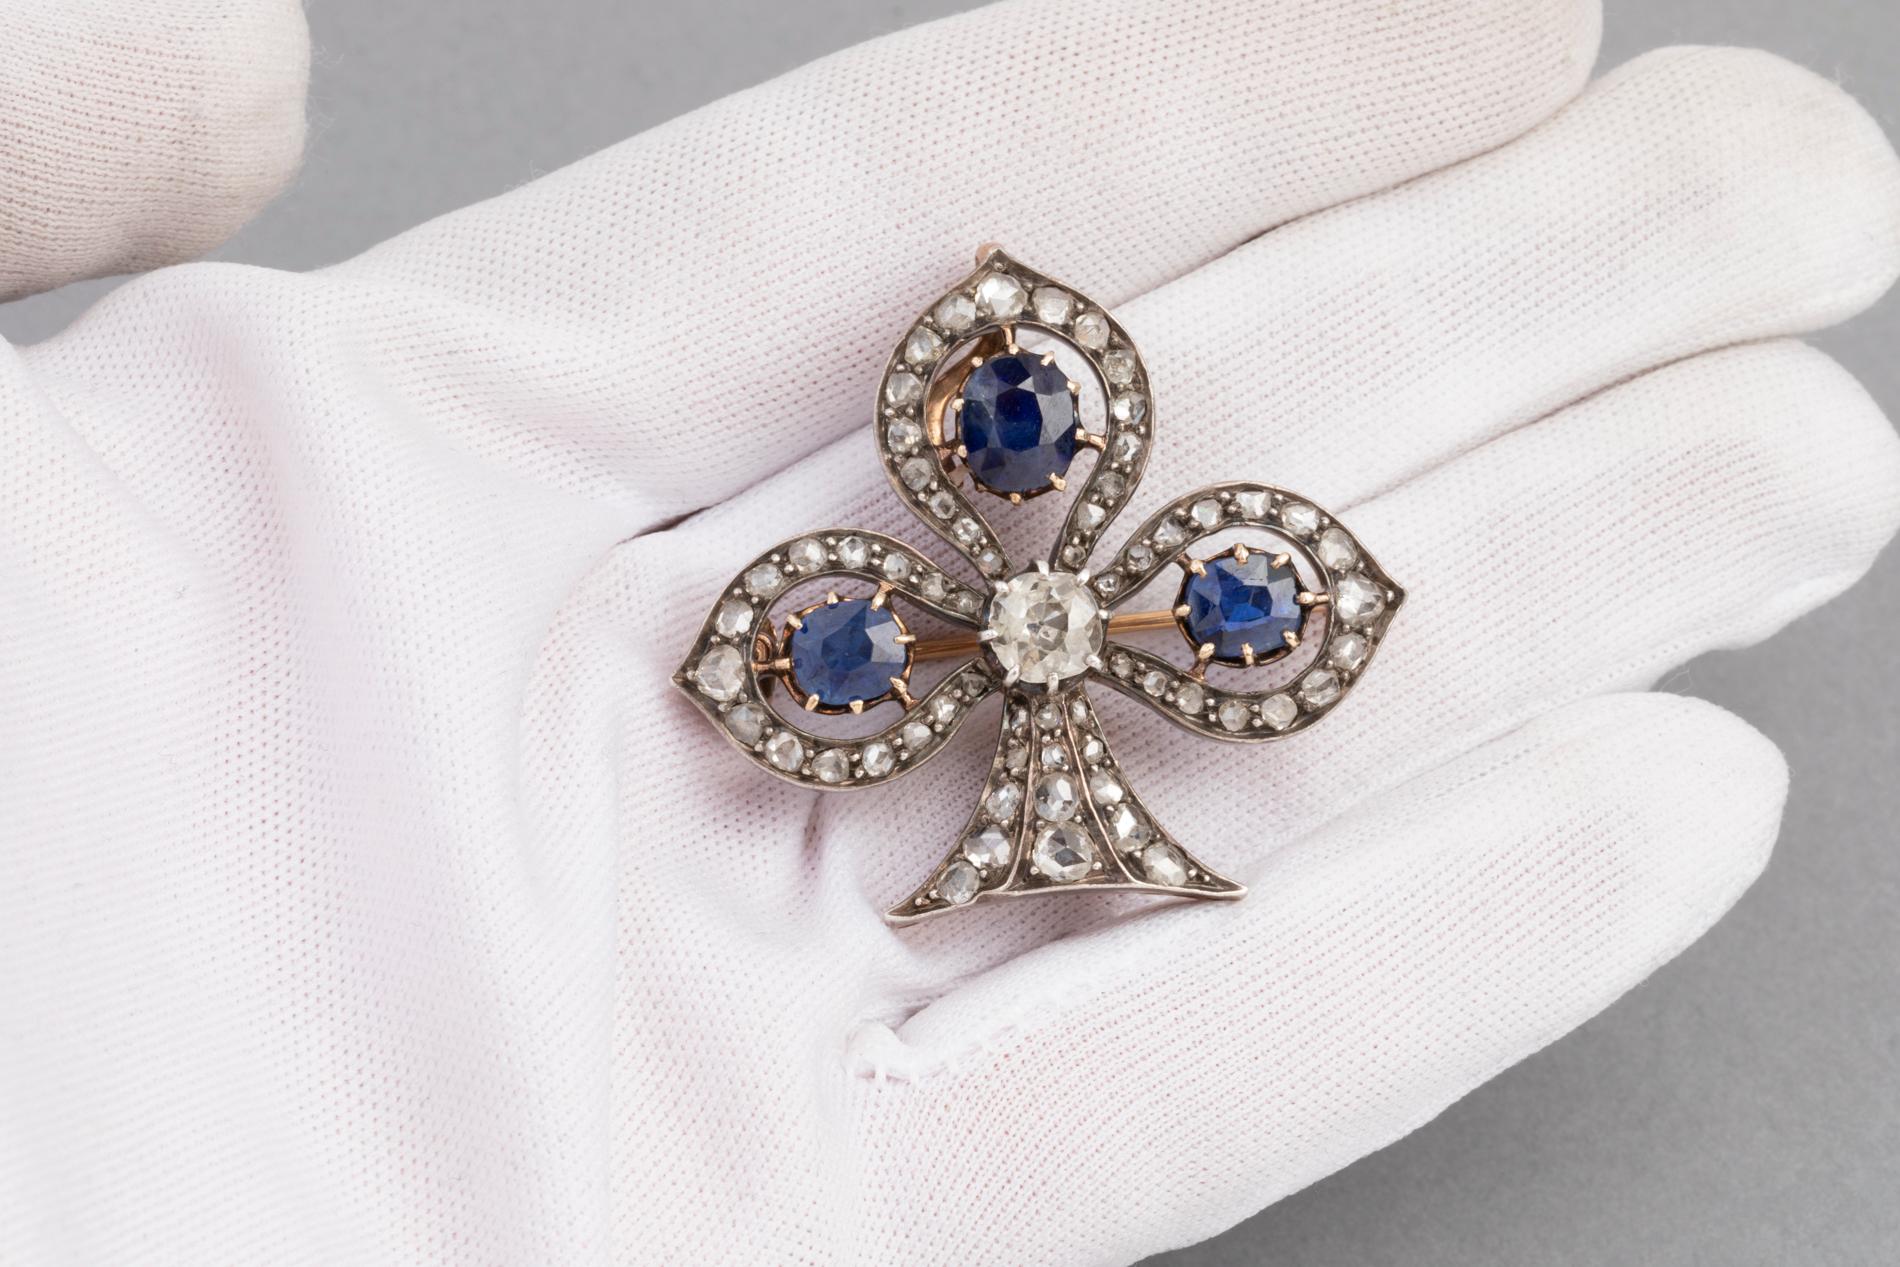 Belle Époque Antique Lys Flower Victorian Brooch, Diamonds and Sapphires For Sale